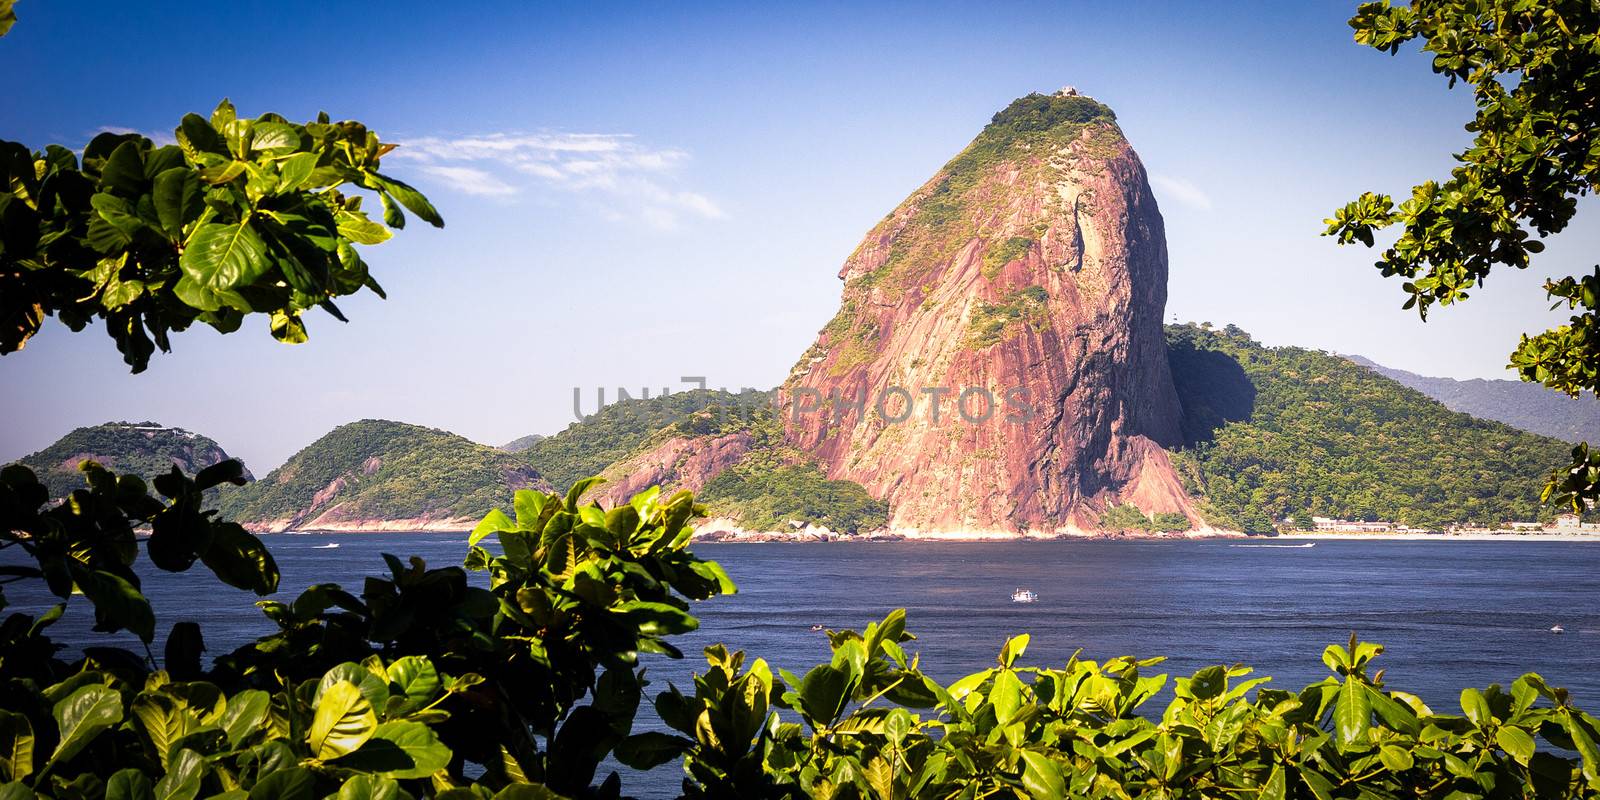 Sugarloaf Mountain, Guanabara Bay, Rio de Janeiro, Brazil